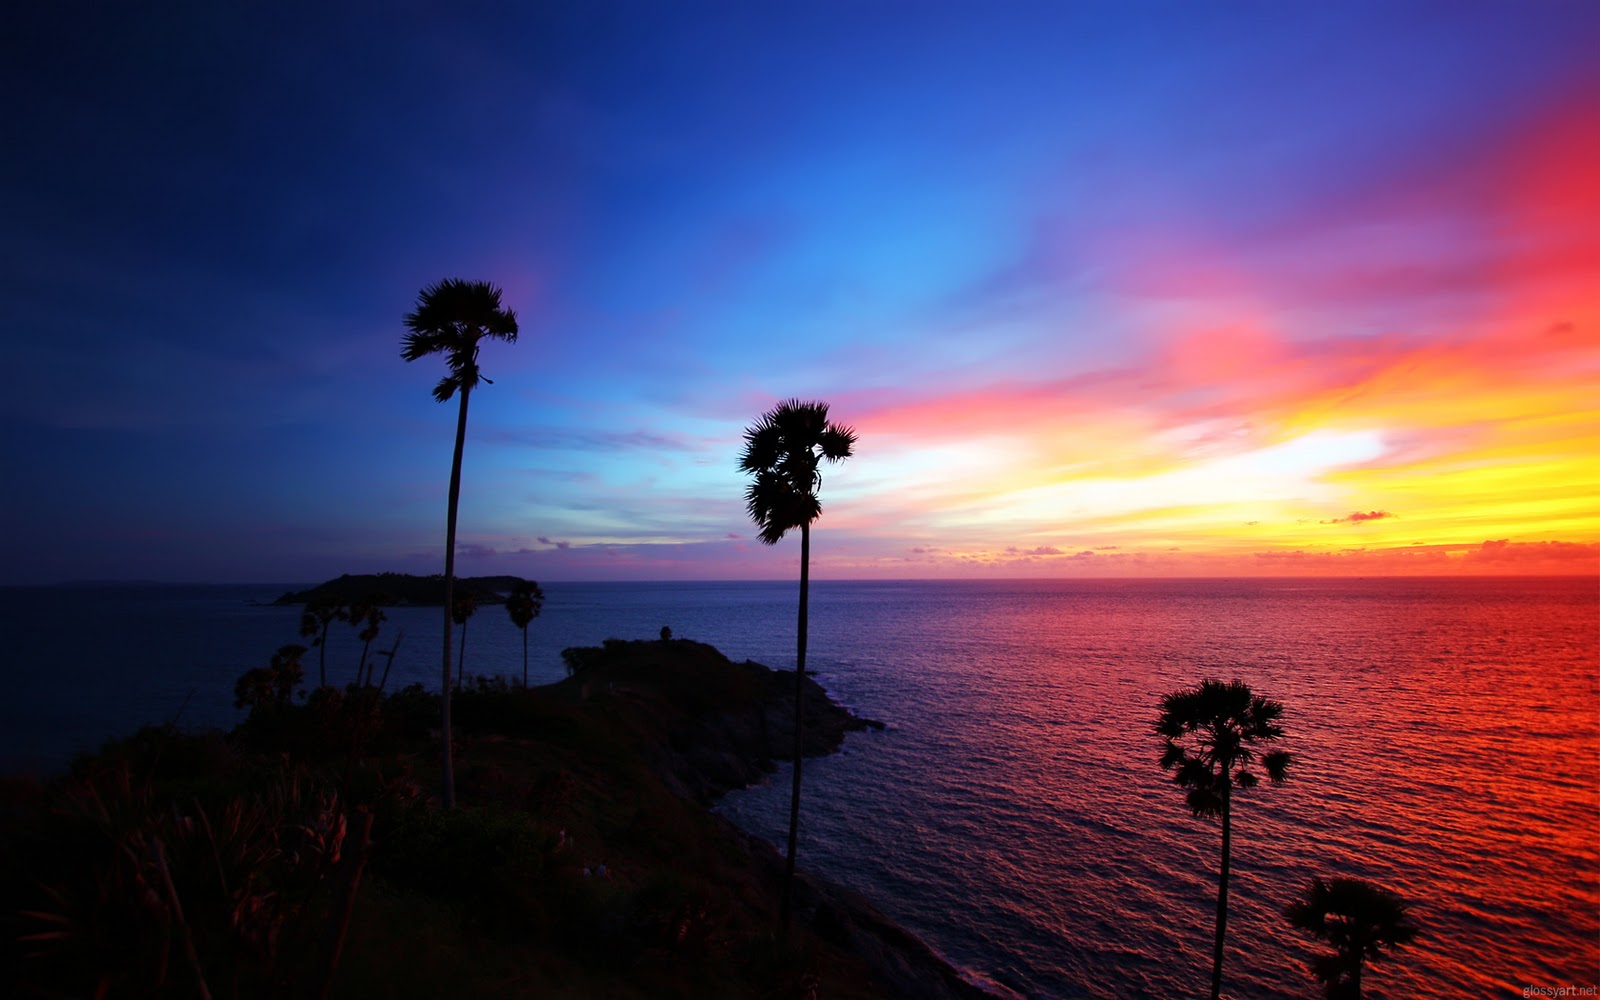 Thailand Beach Sunset